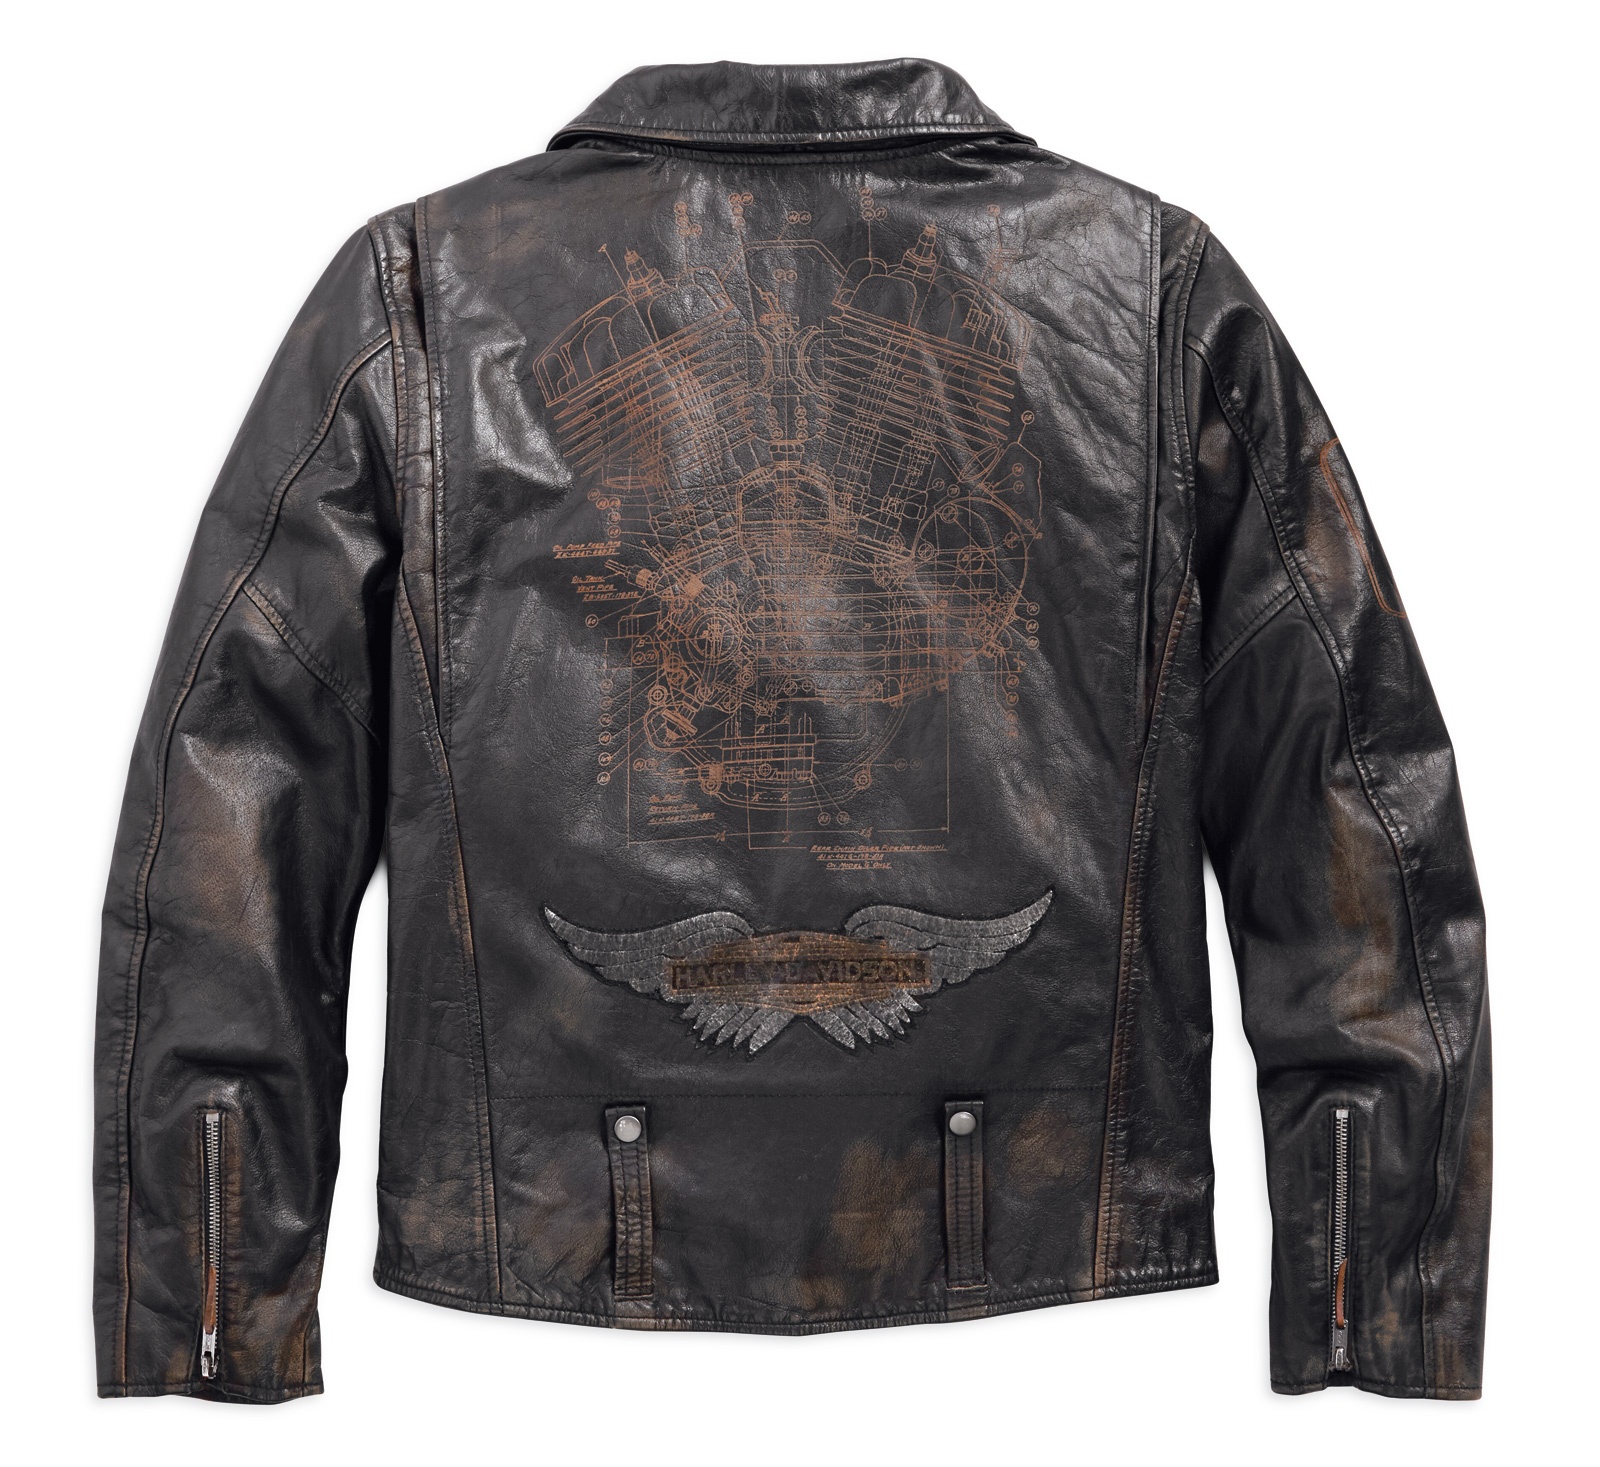 Harley Jackets Leather : Harley Davidson Mickey Rourke Biker Leather